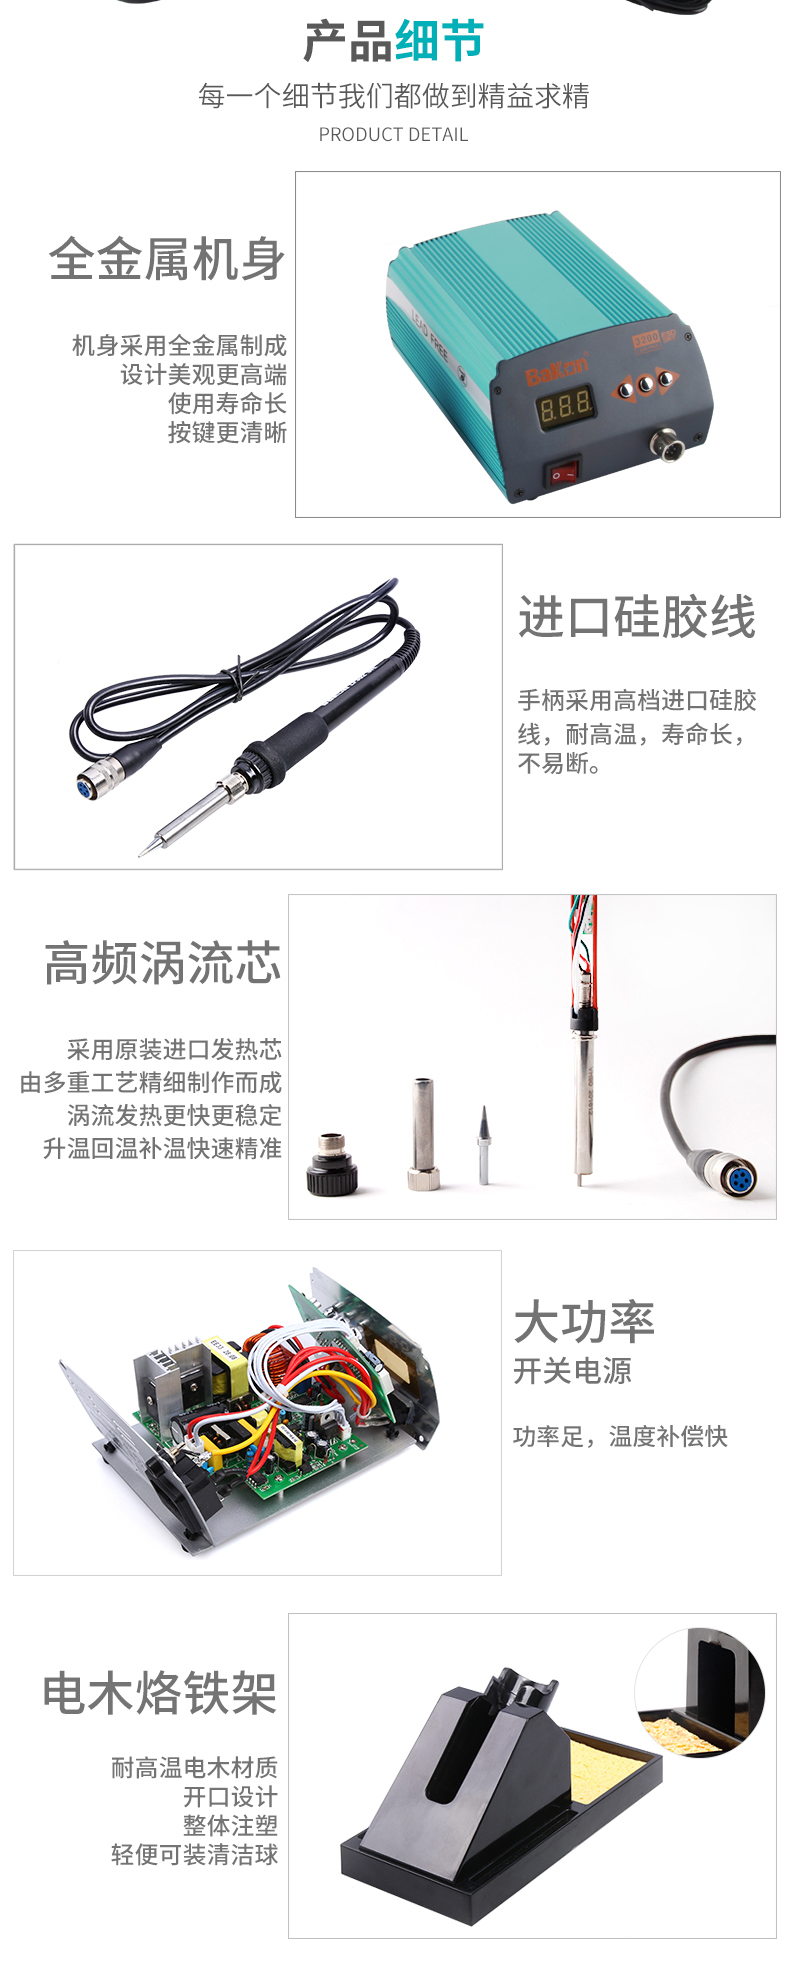 BAKON BK3200 High Frequency high power lead-free digital display soldering Iron station